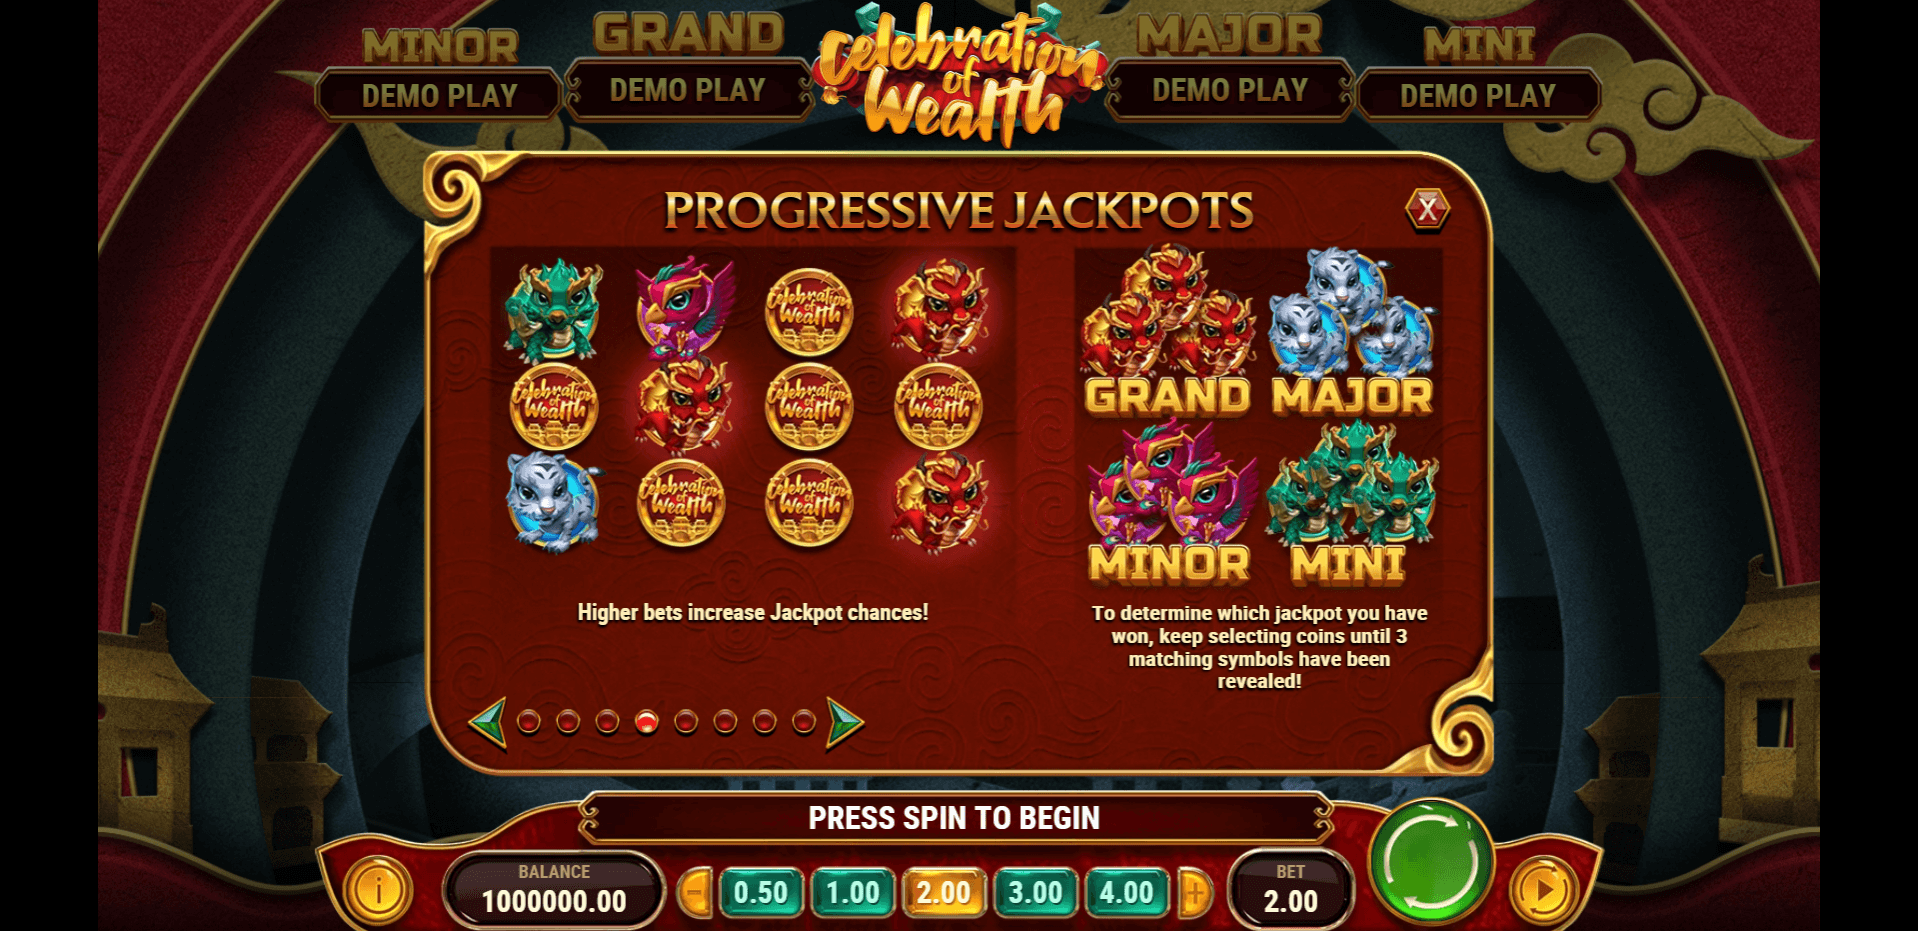 celebration of wealth slot machine detail image 3